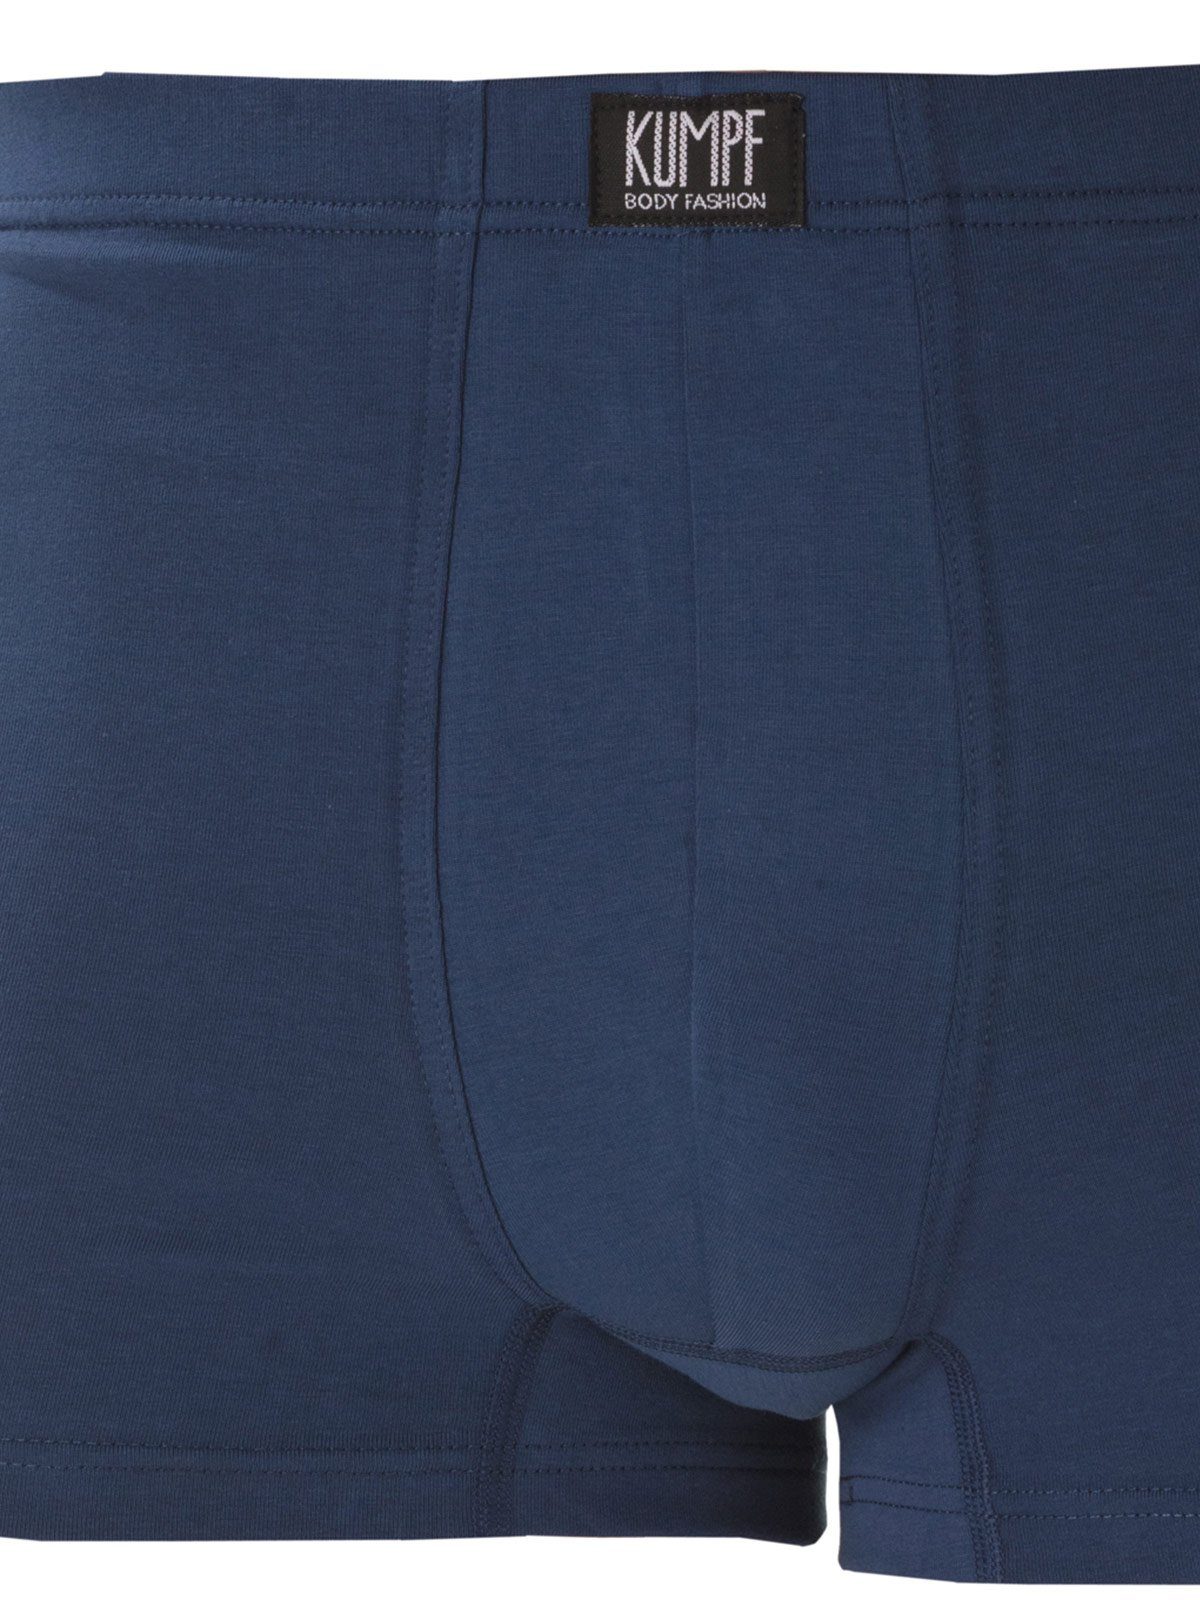 Pants Pants Markenqualität KUMPF Cotton darkblue 1-St) (Stück, Herren hohe Retro Bio